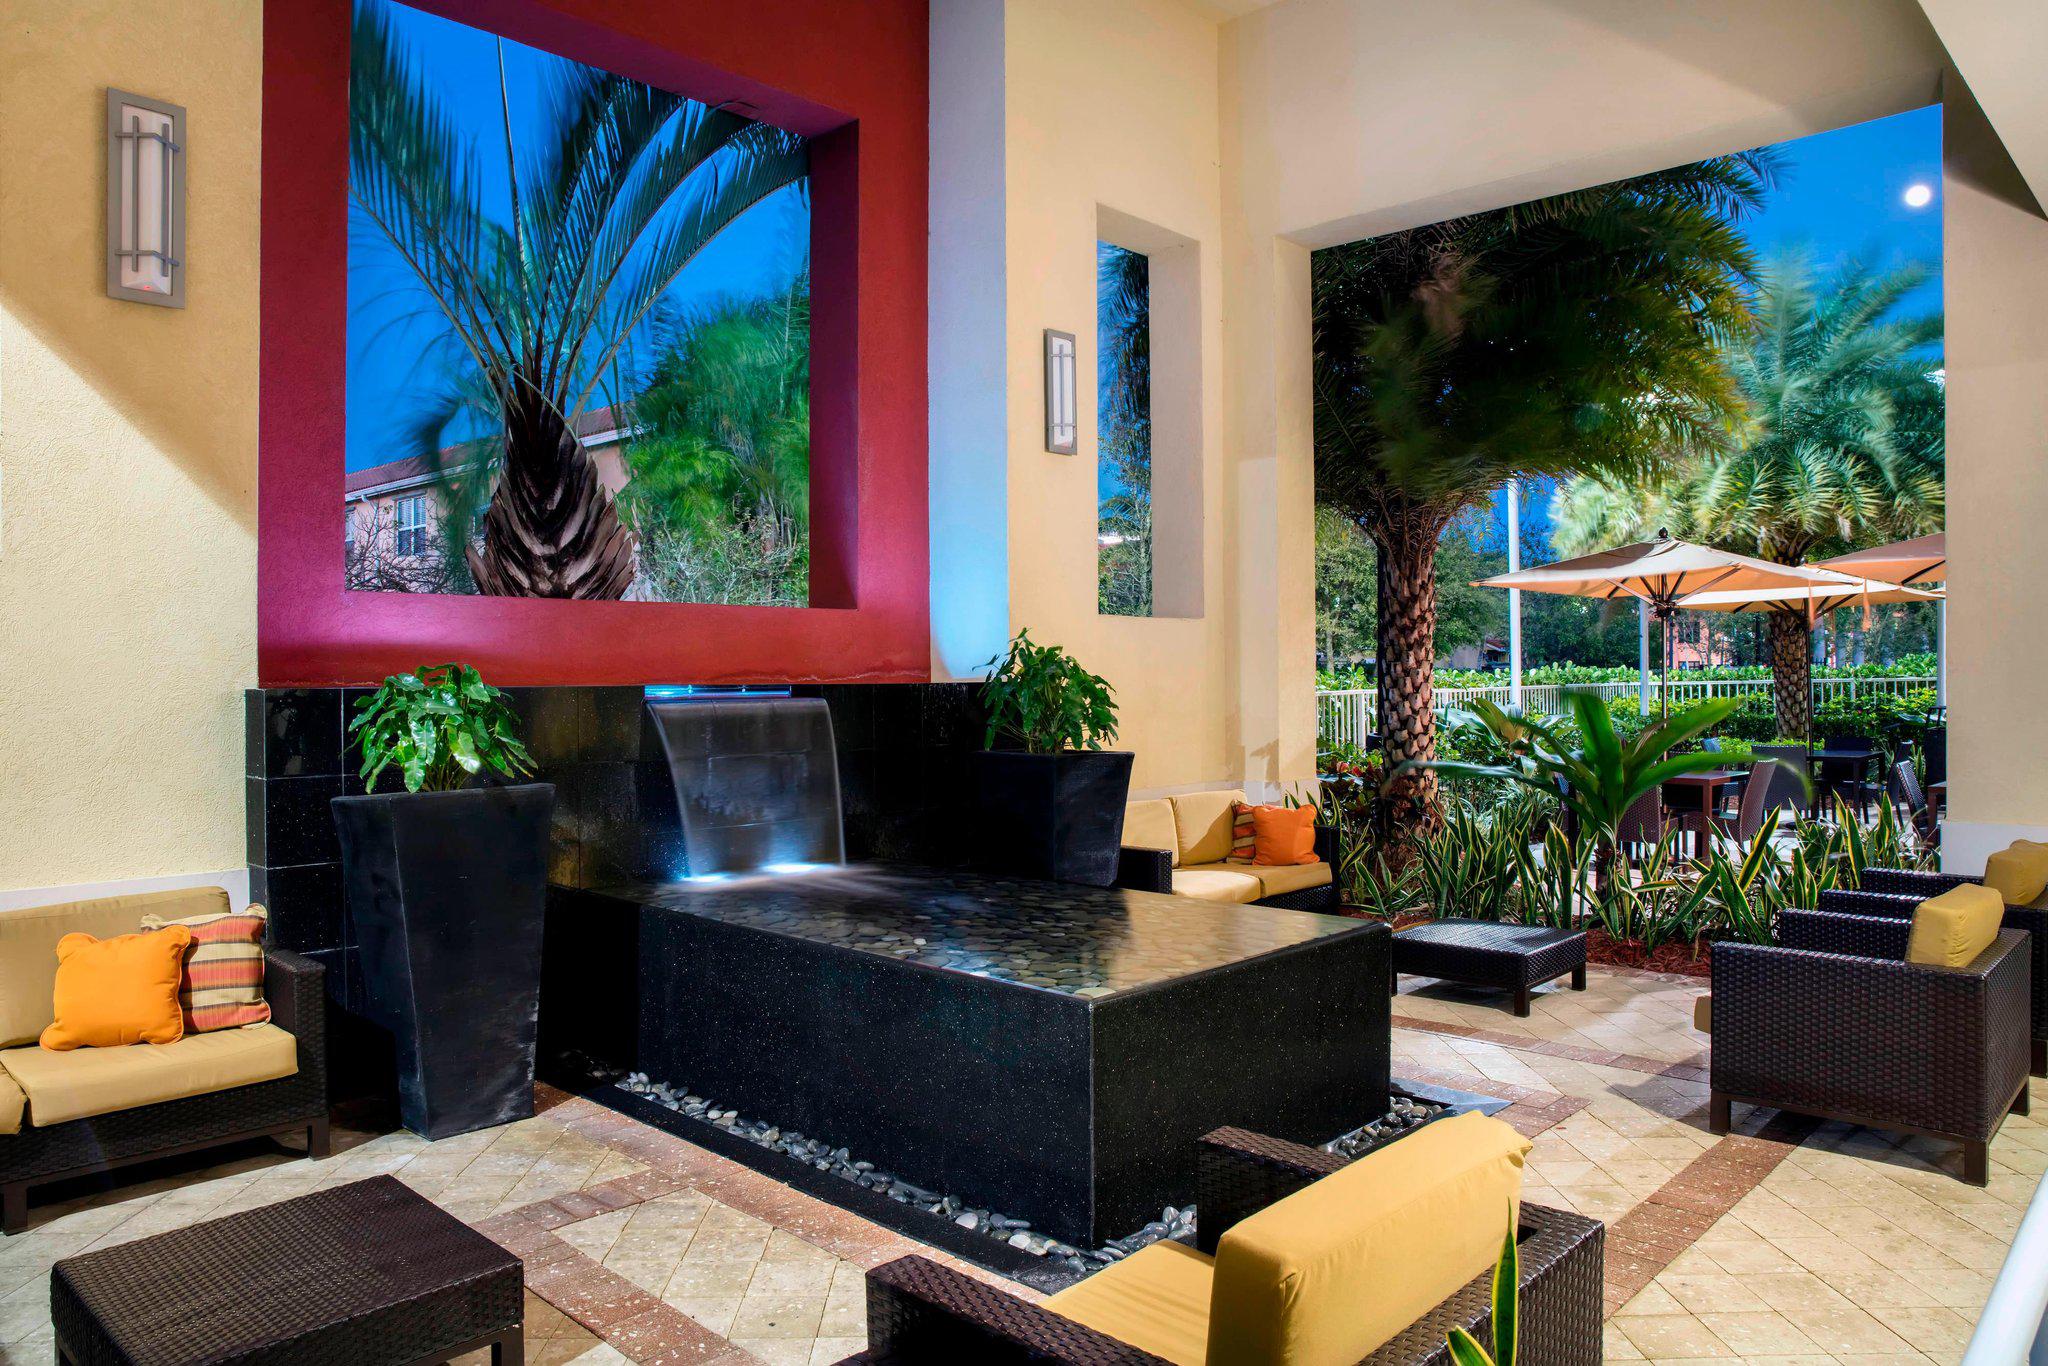 Courtyard by Marriott Miami Homestead